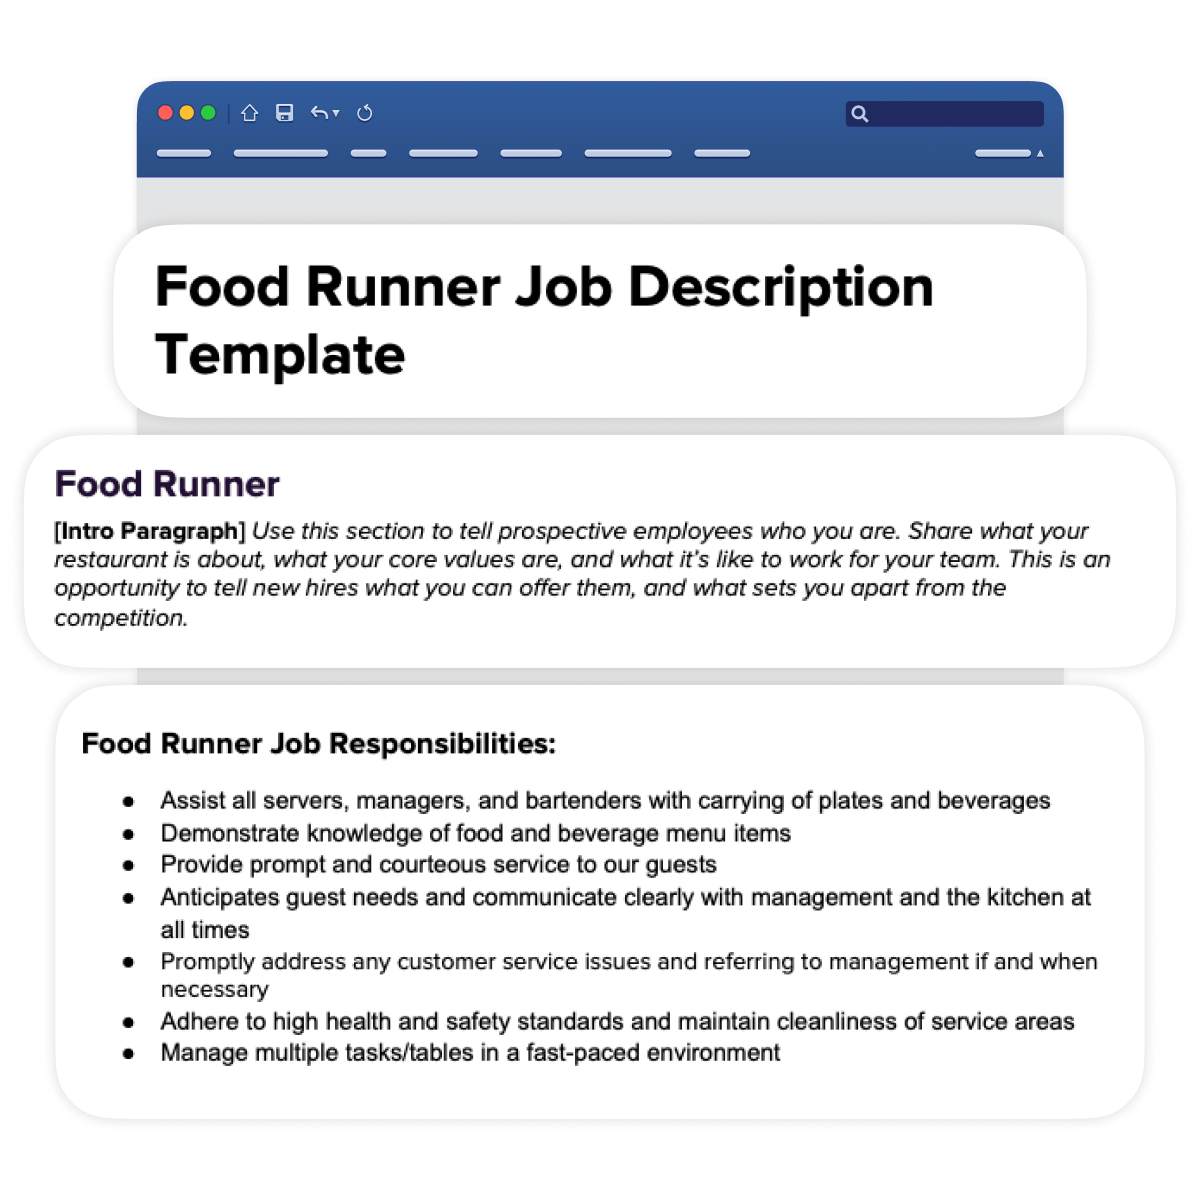 Example food runner job description template